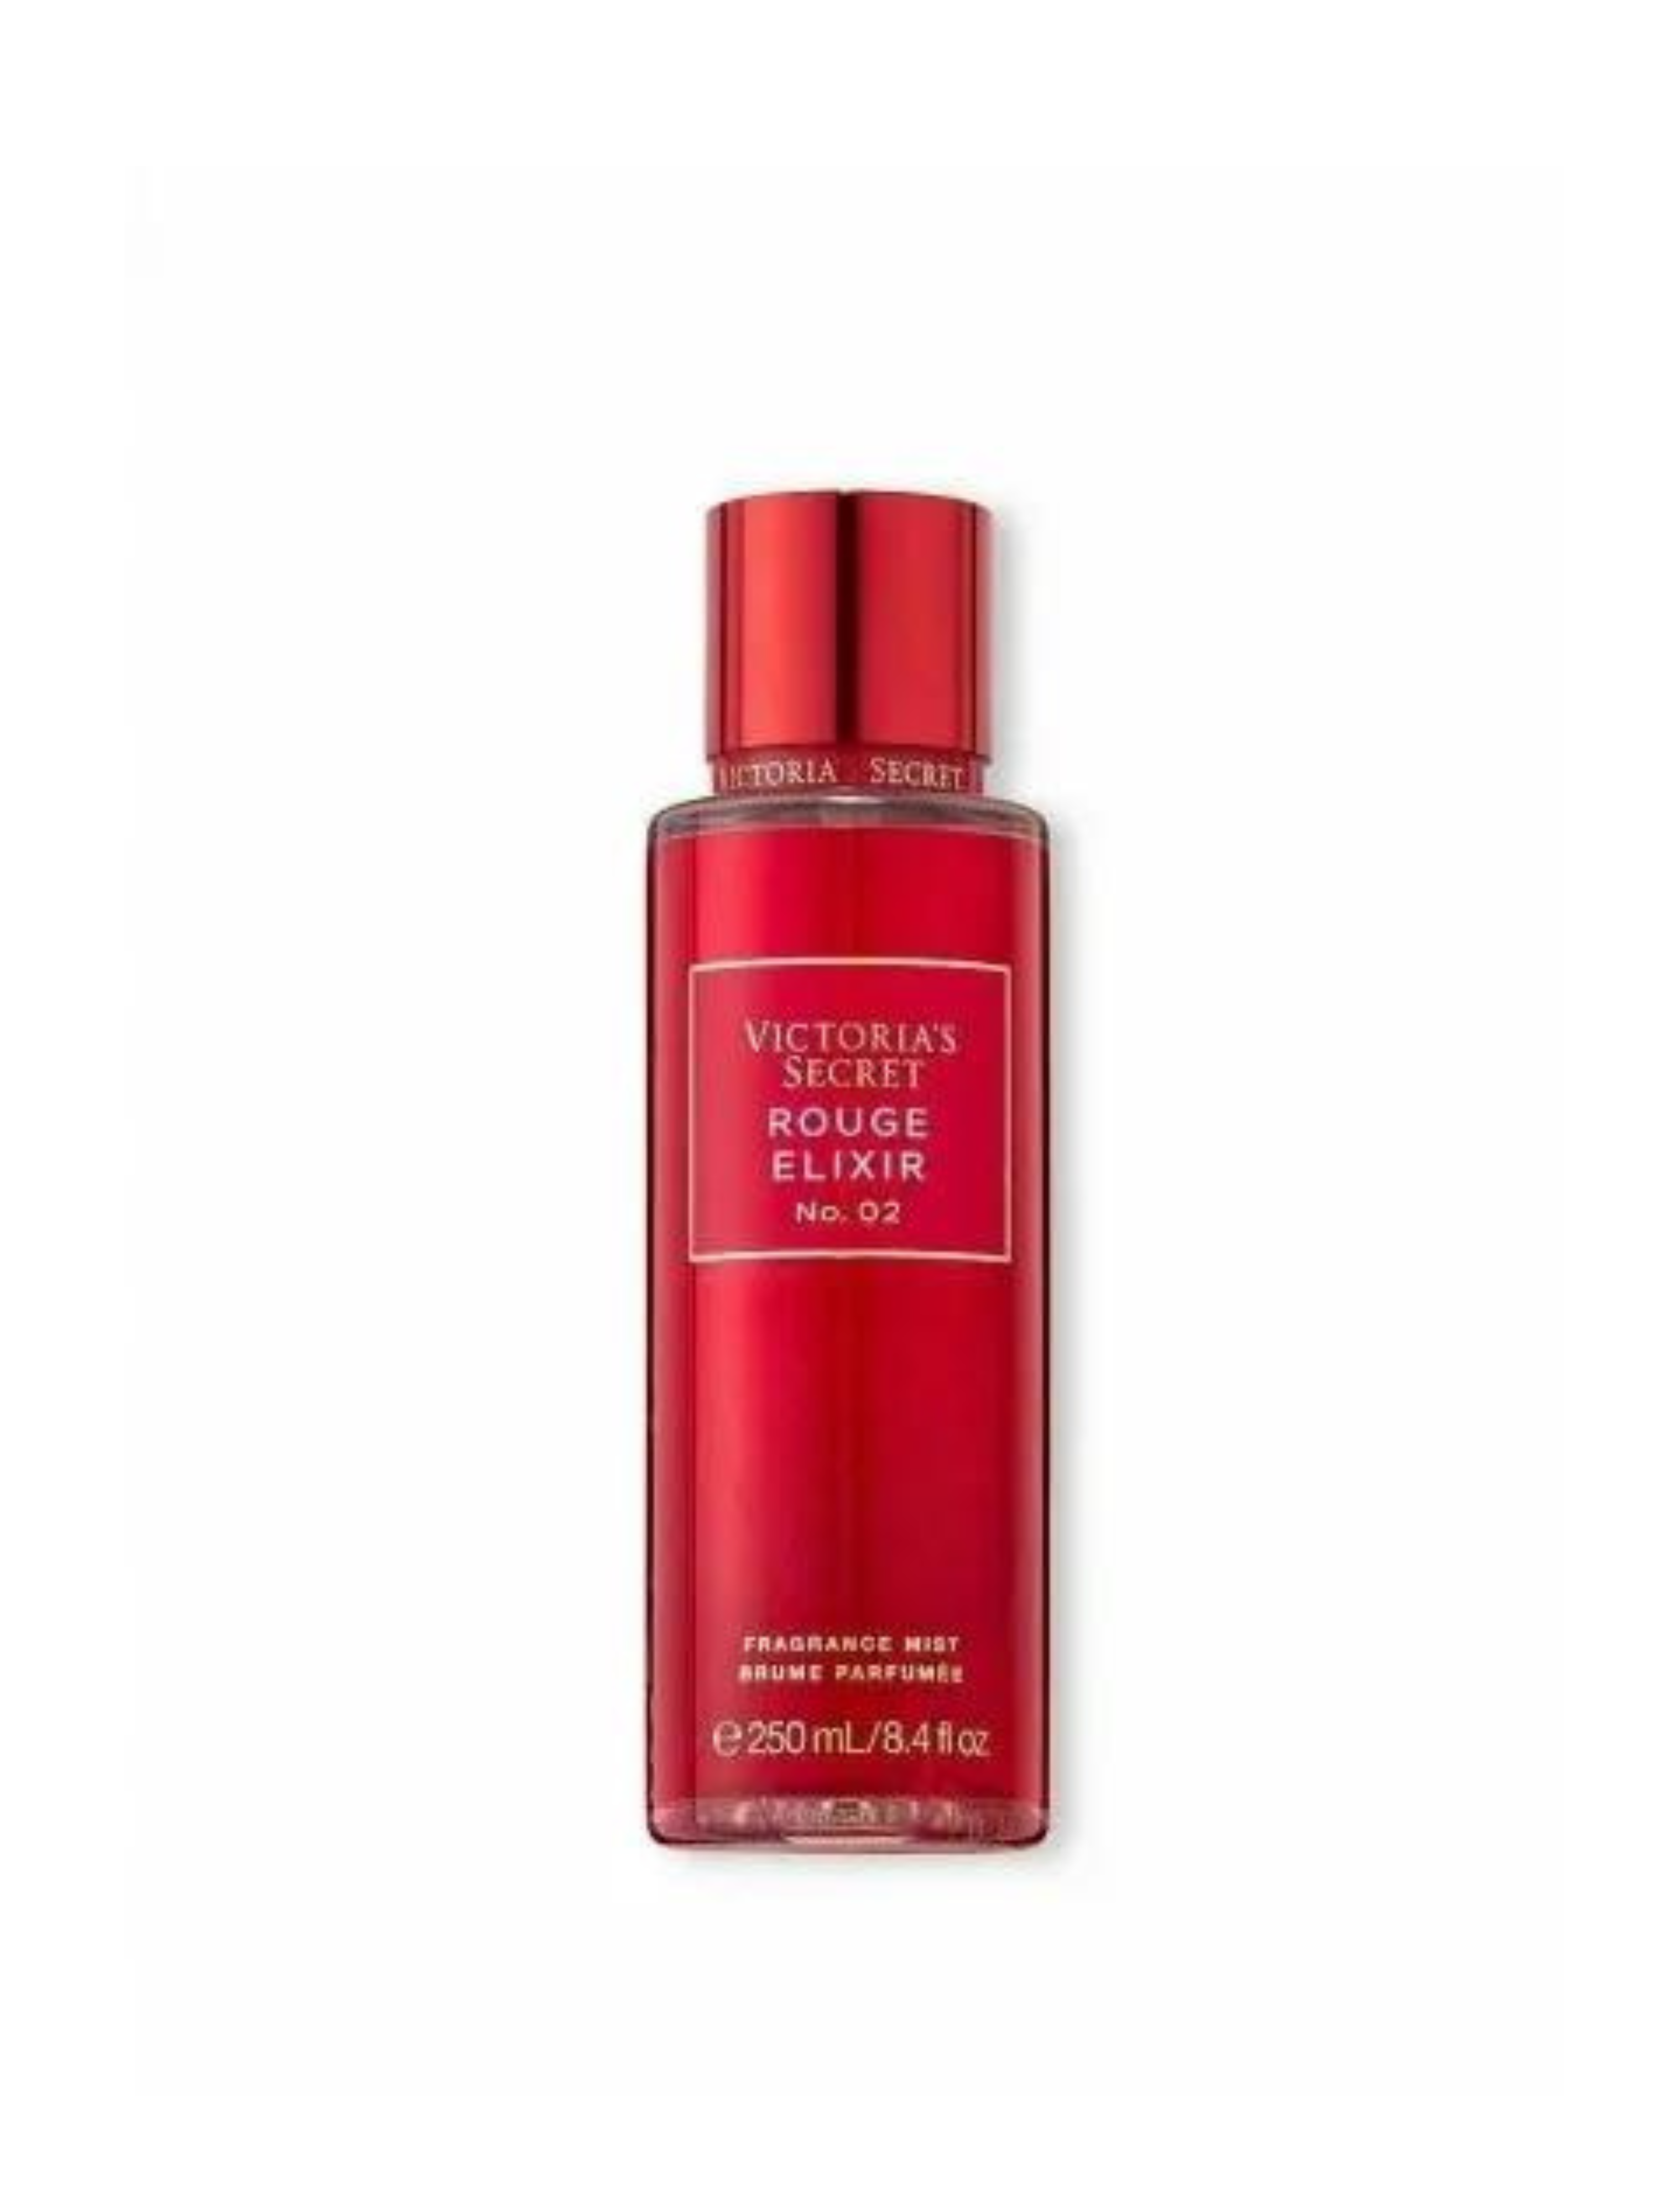 Victoria's Secret Rouge Elixir Body Mist